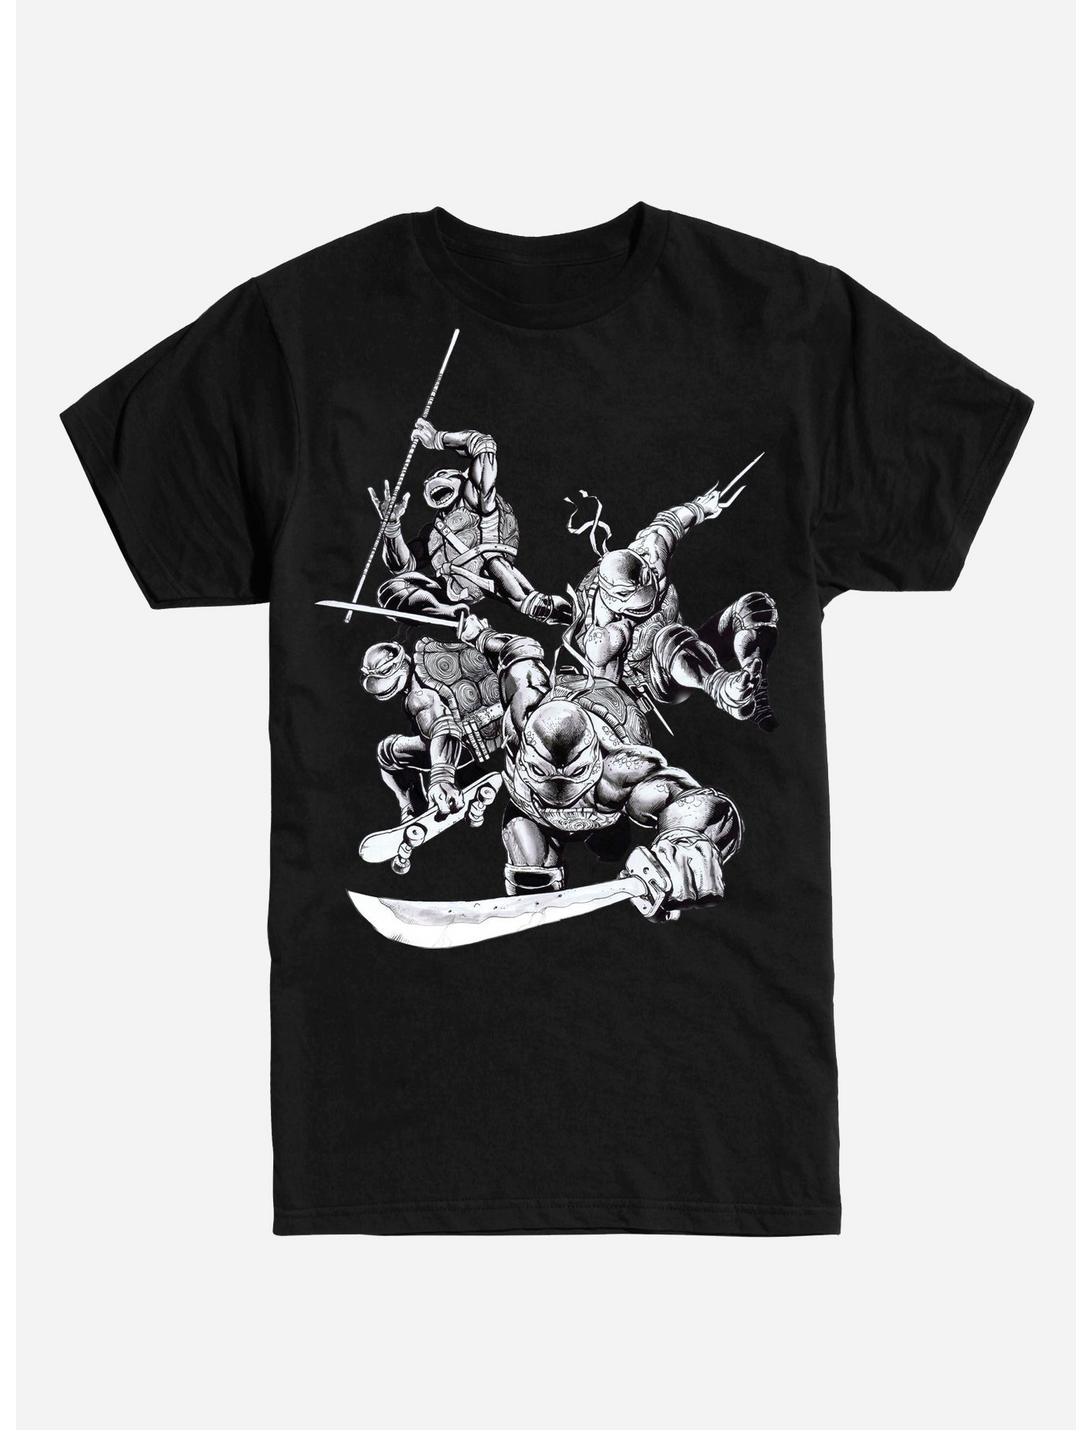 Teenage Mutant Ninja Turtles Black and White Group T-Shirt, BLACK, hi-res